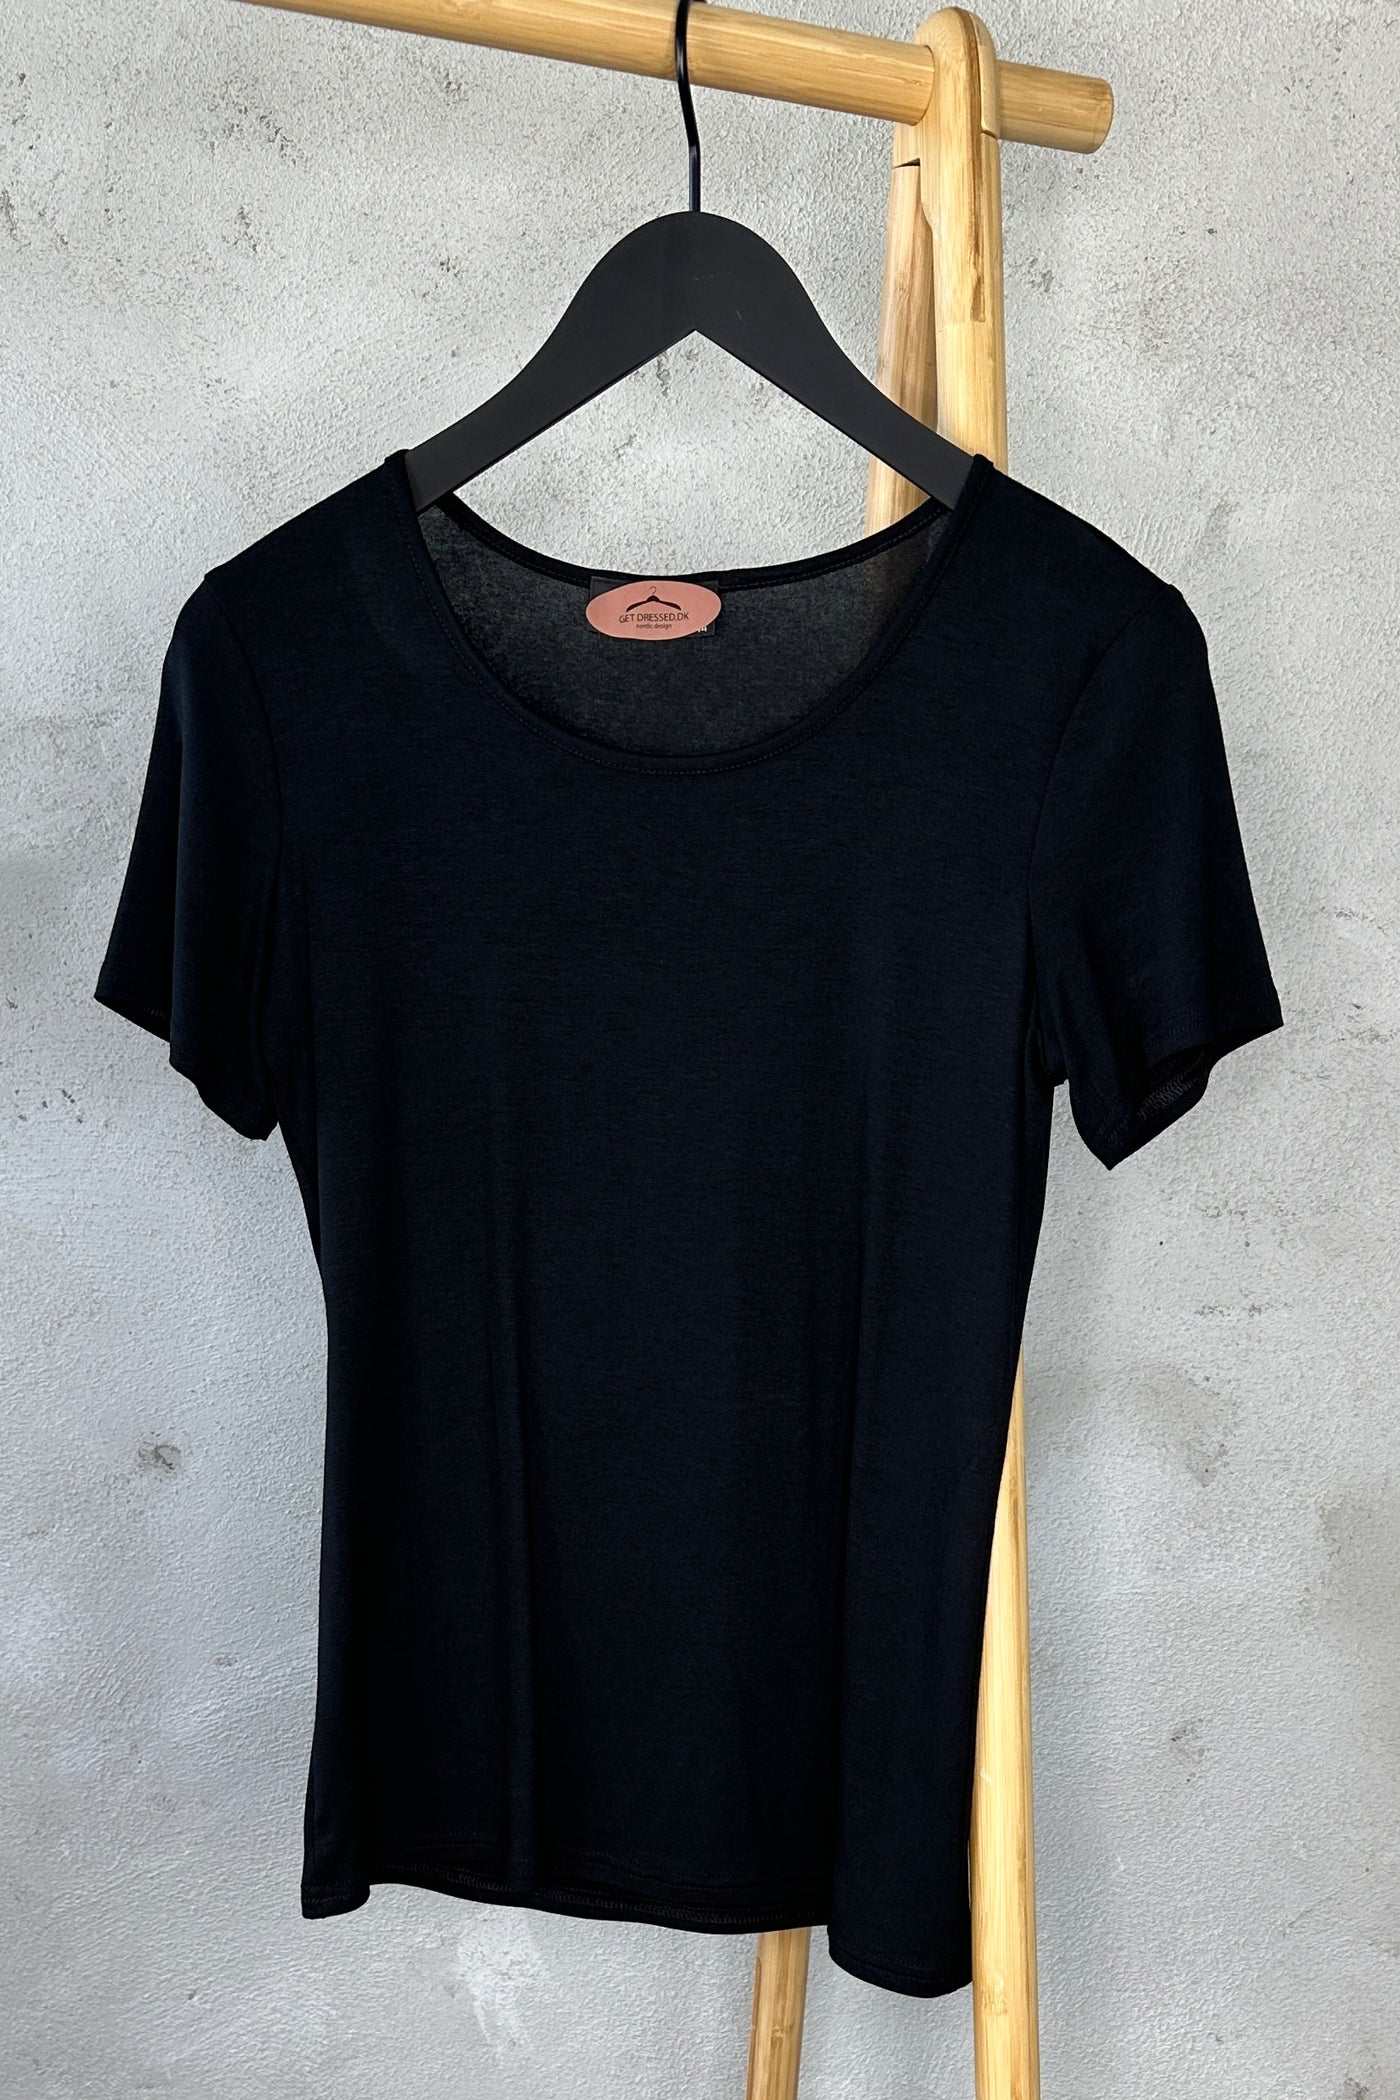 Frida T-shirt Black